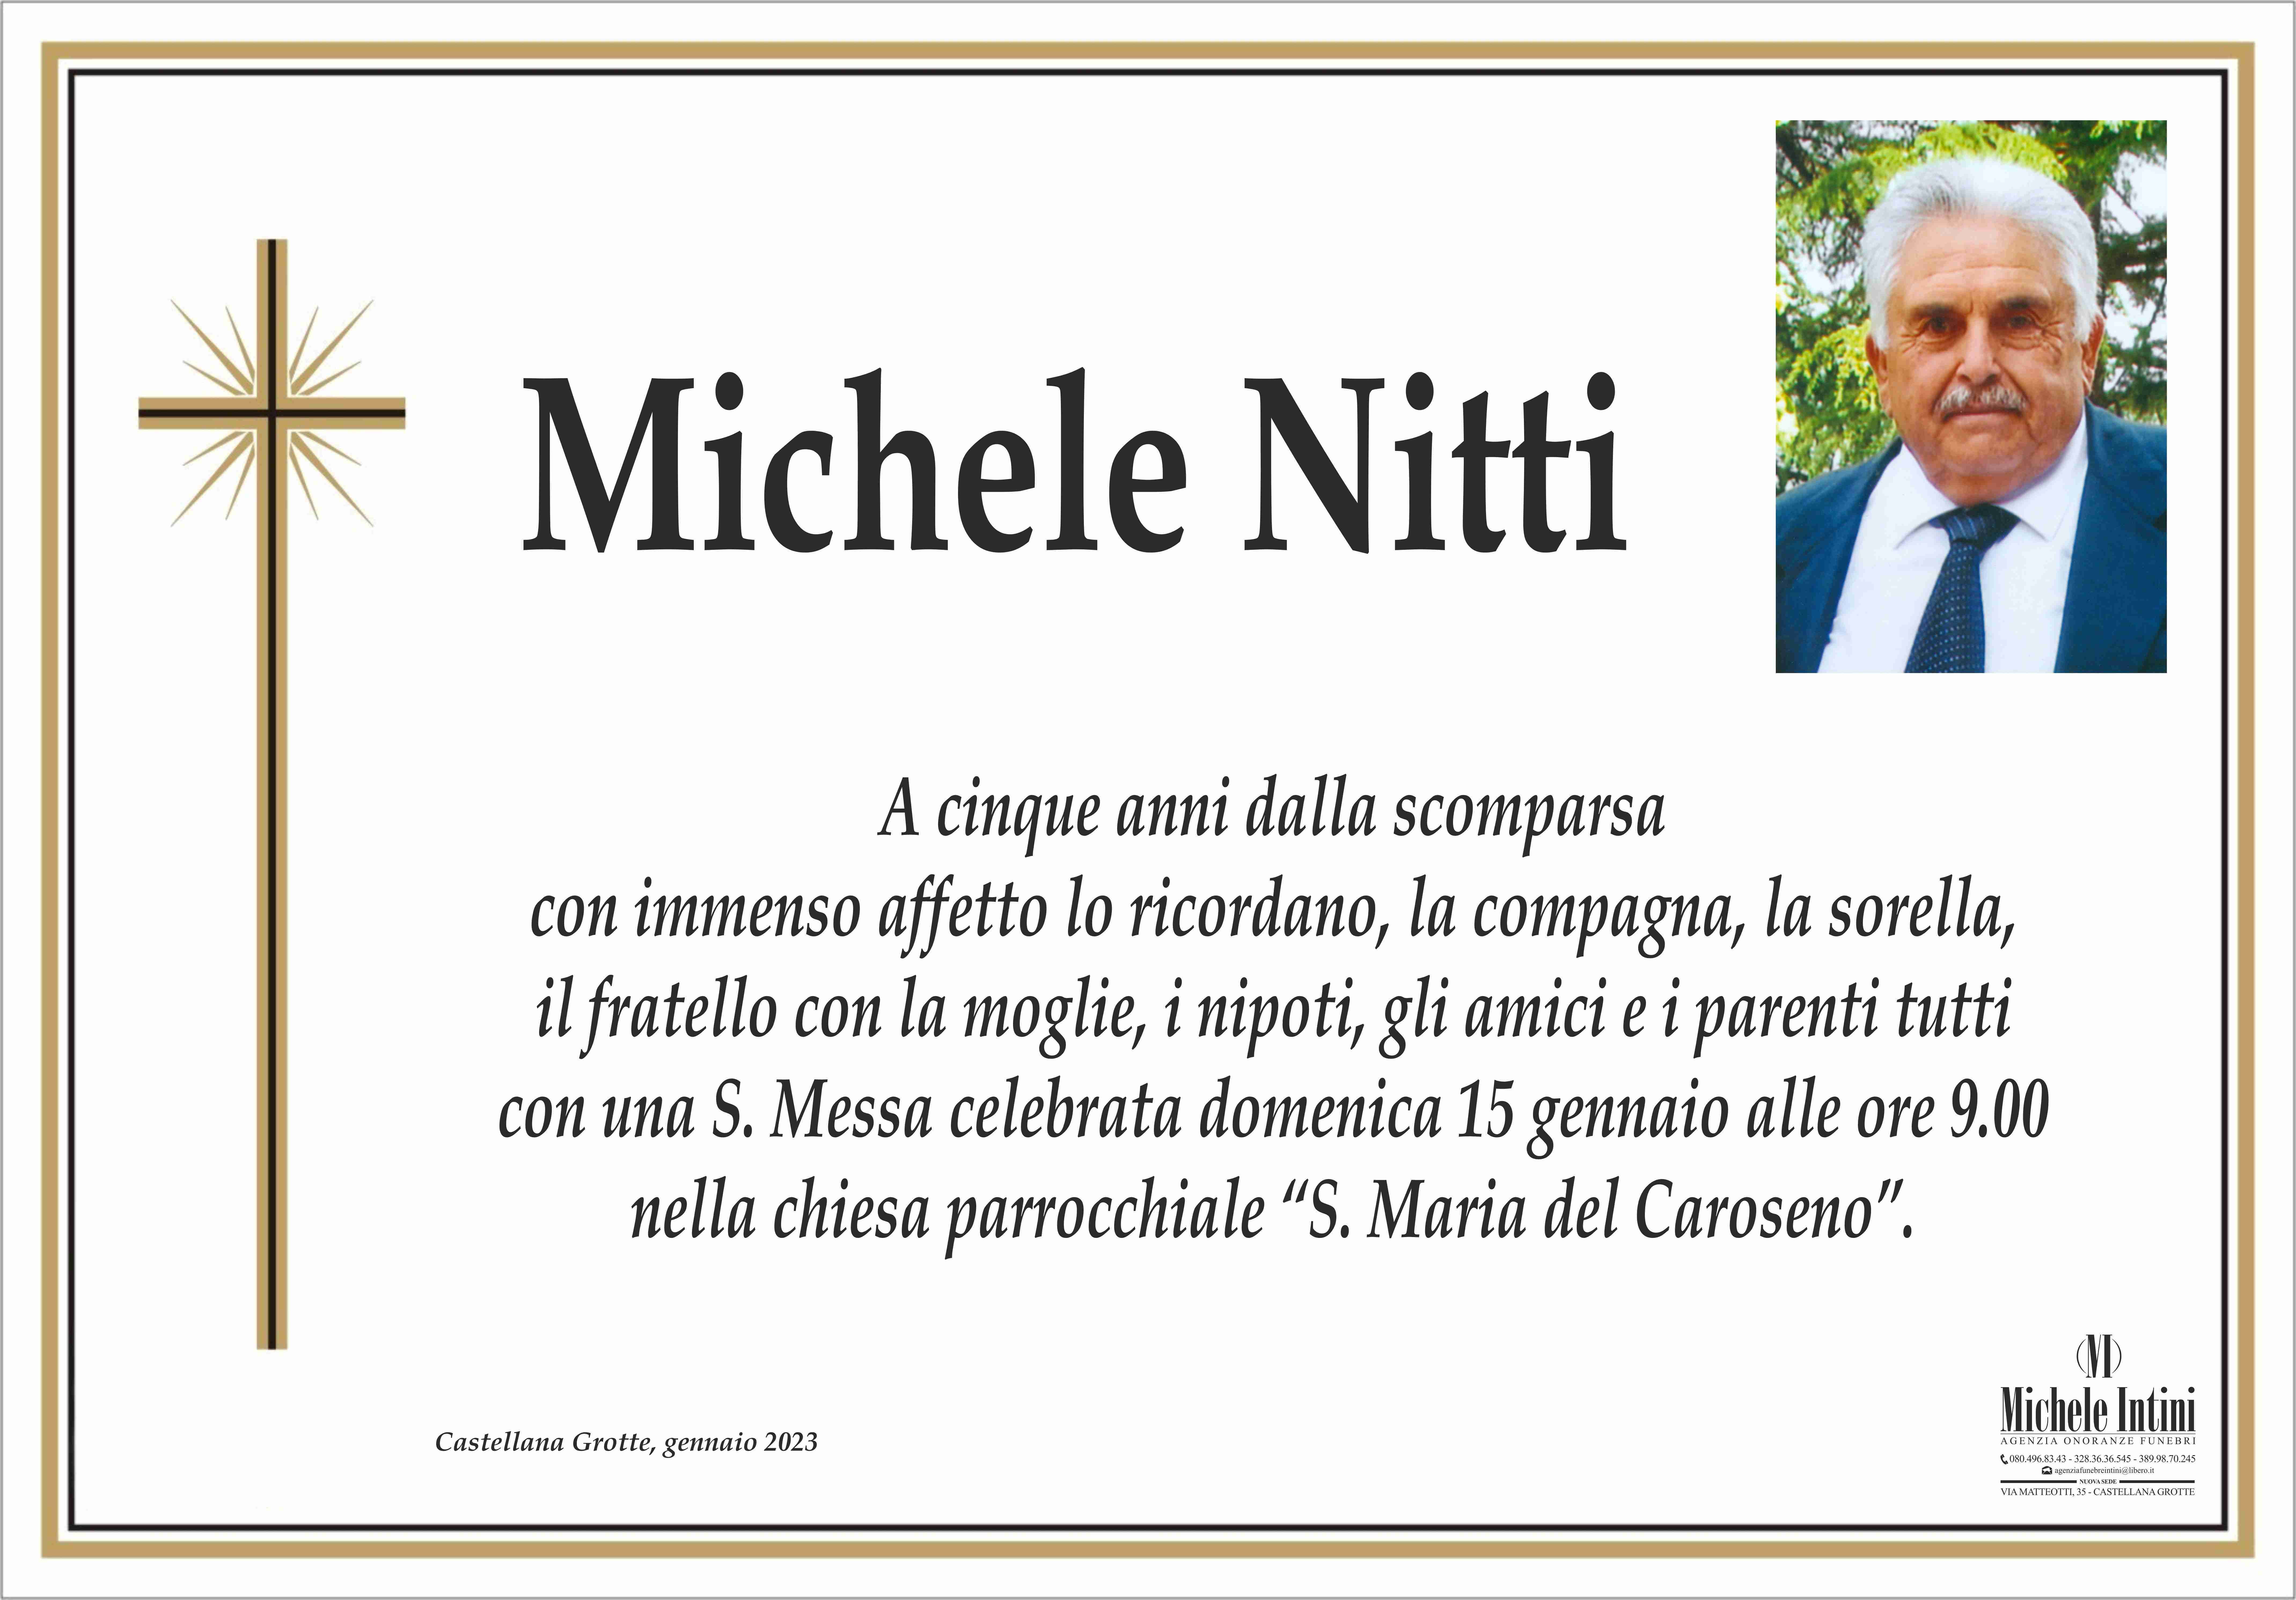 Michele Nitti